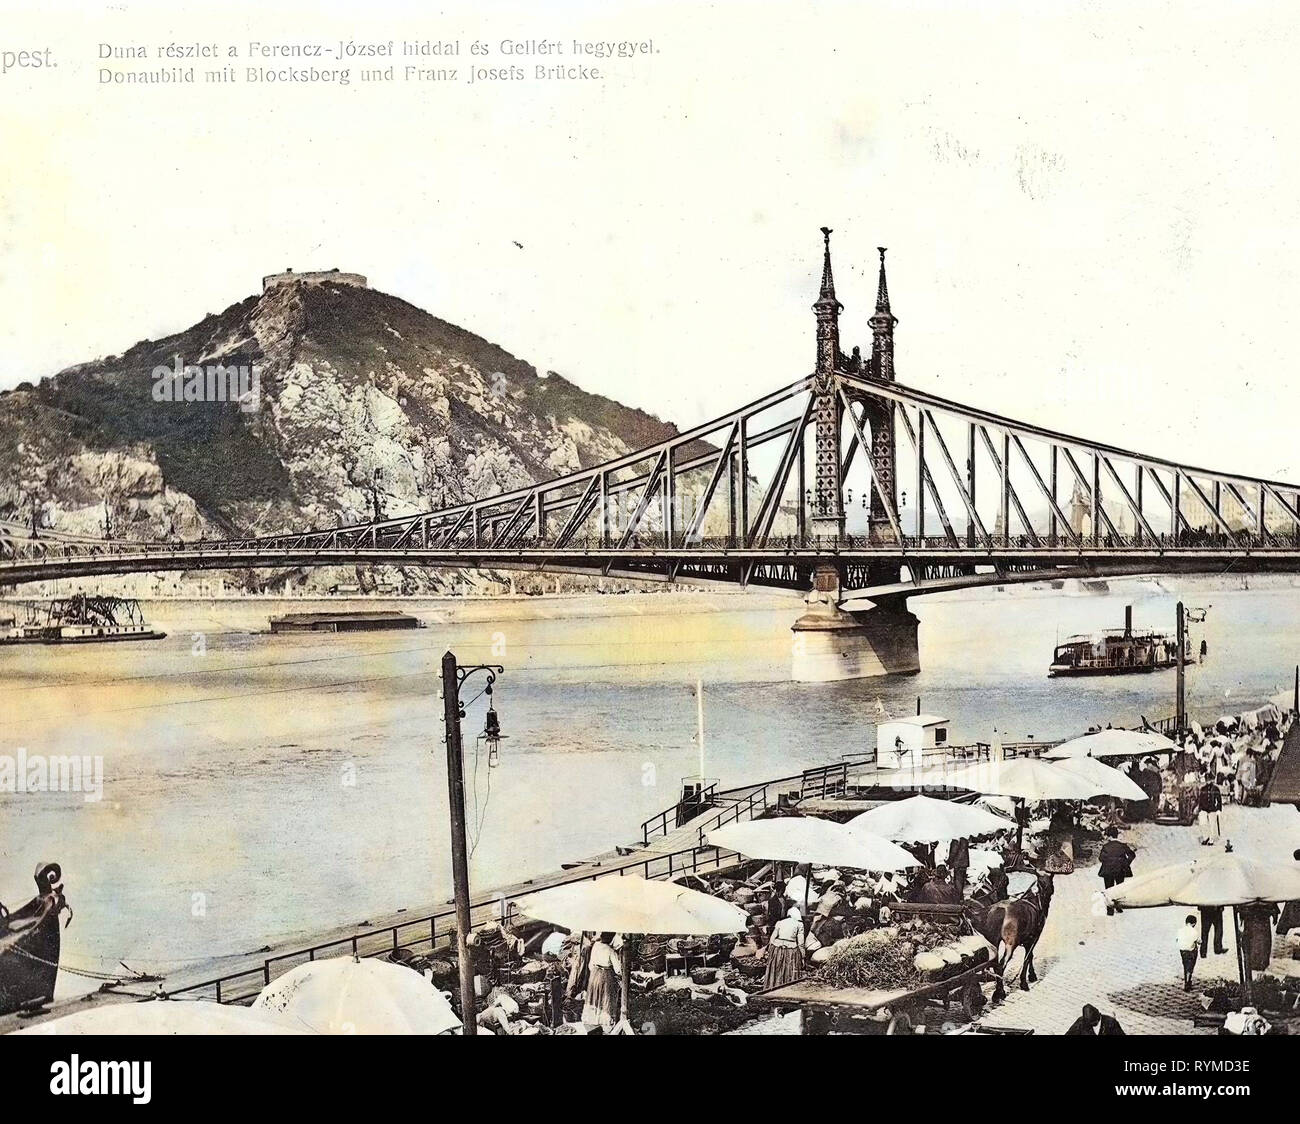 Historical images of Liberty Bridge, Budapest, Historical photographs of Gellért Hill, Markets in Budapest, 1906, Donaubild mit Blocksberg und Franz Josefs Brücke, Hungary Stock Photo